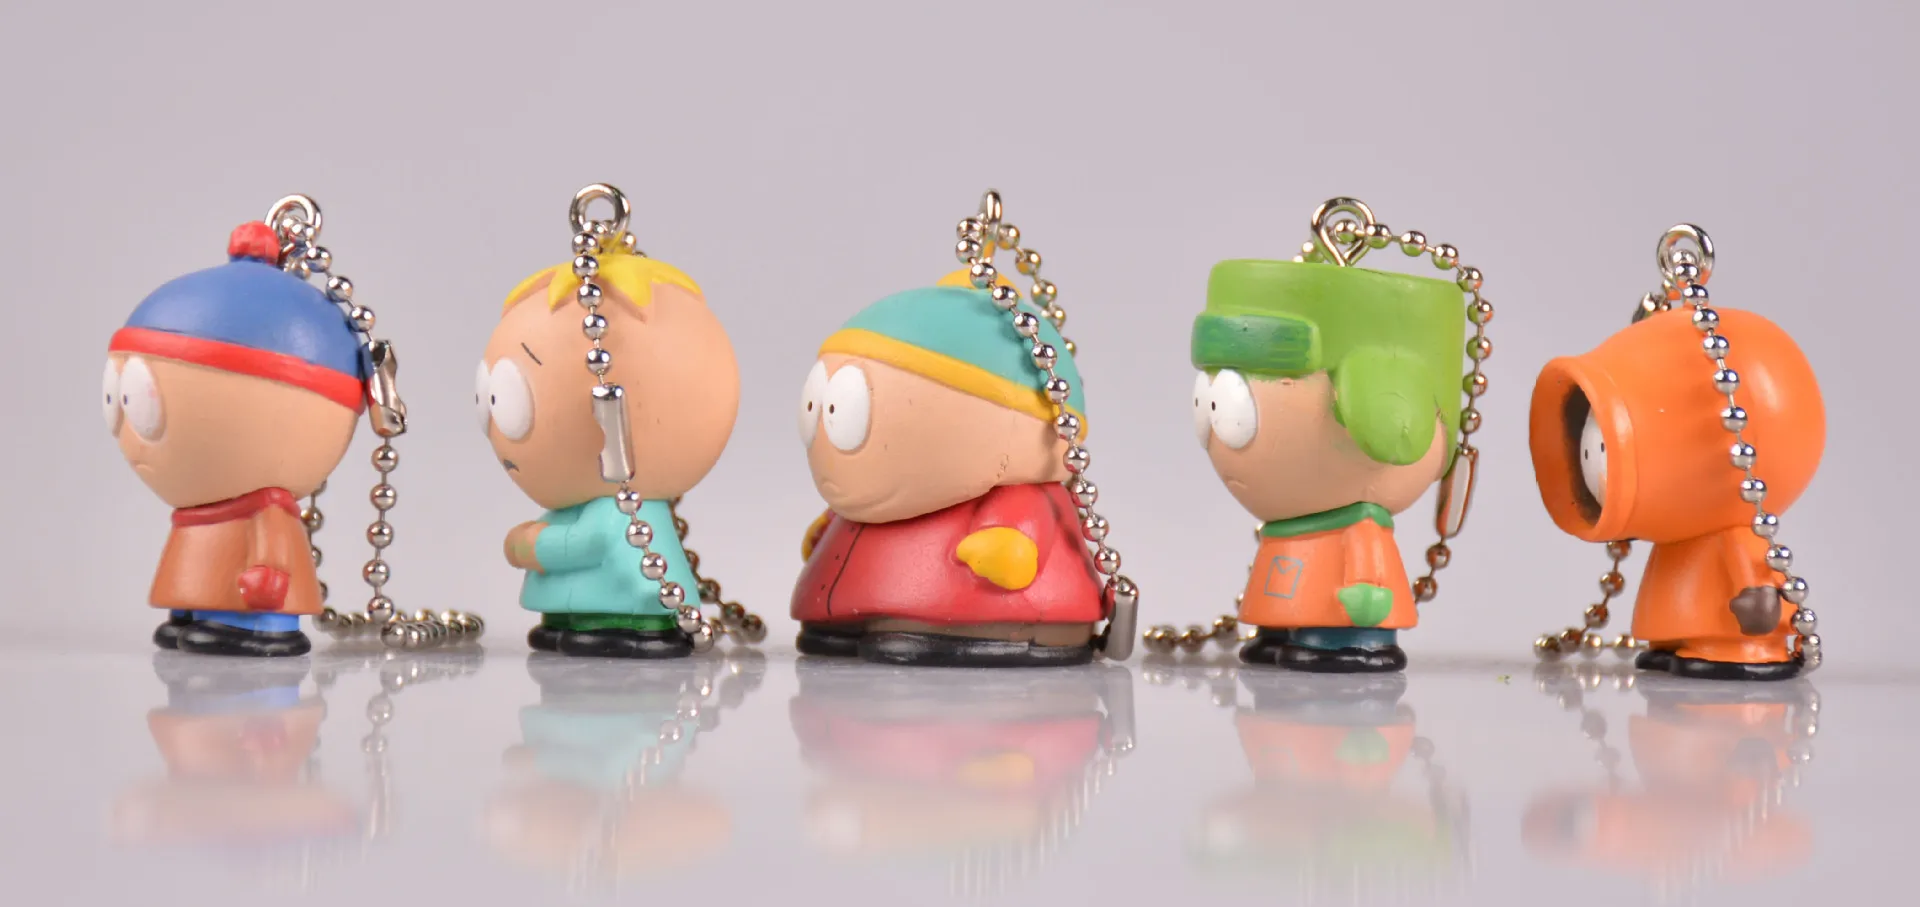 5 Cartoon Anime vinyl Enamel Dolls SouthPark Bad Boys Land Keychain Kyle Keychain Gifts for Kids 1 - South Park Plush